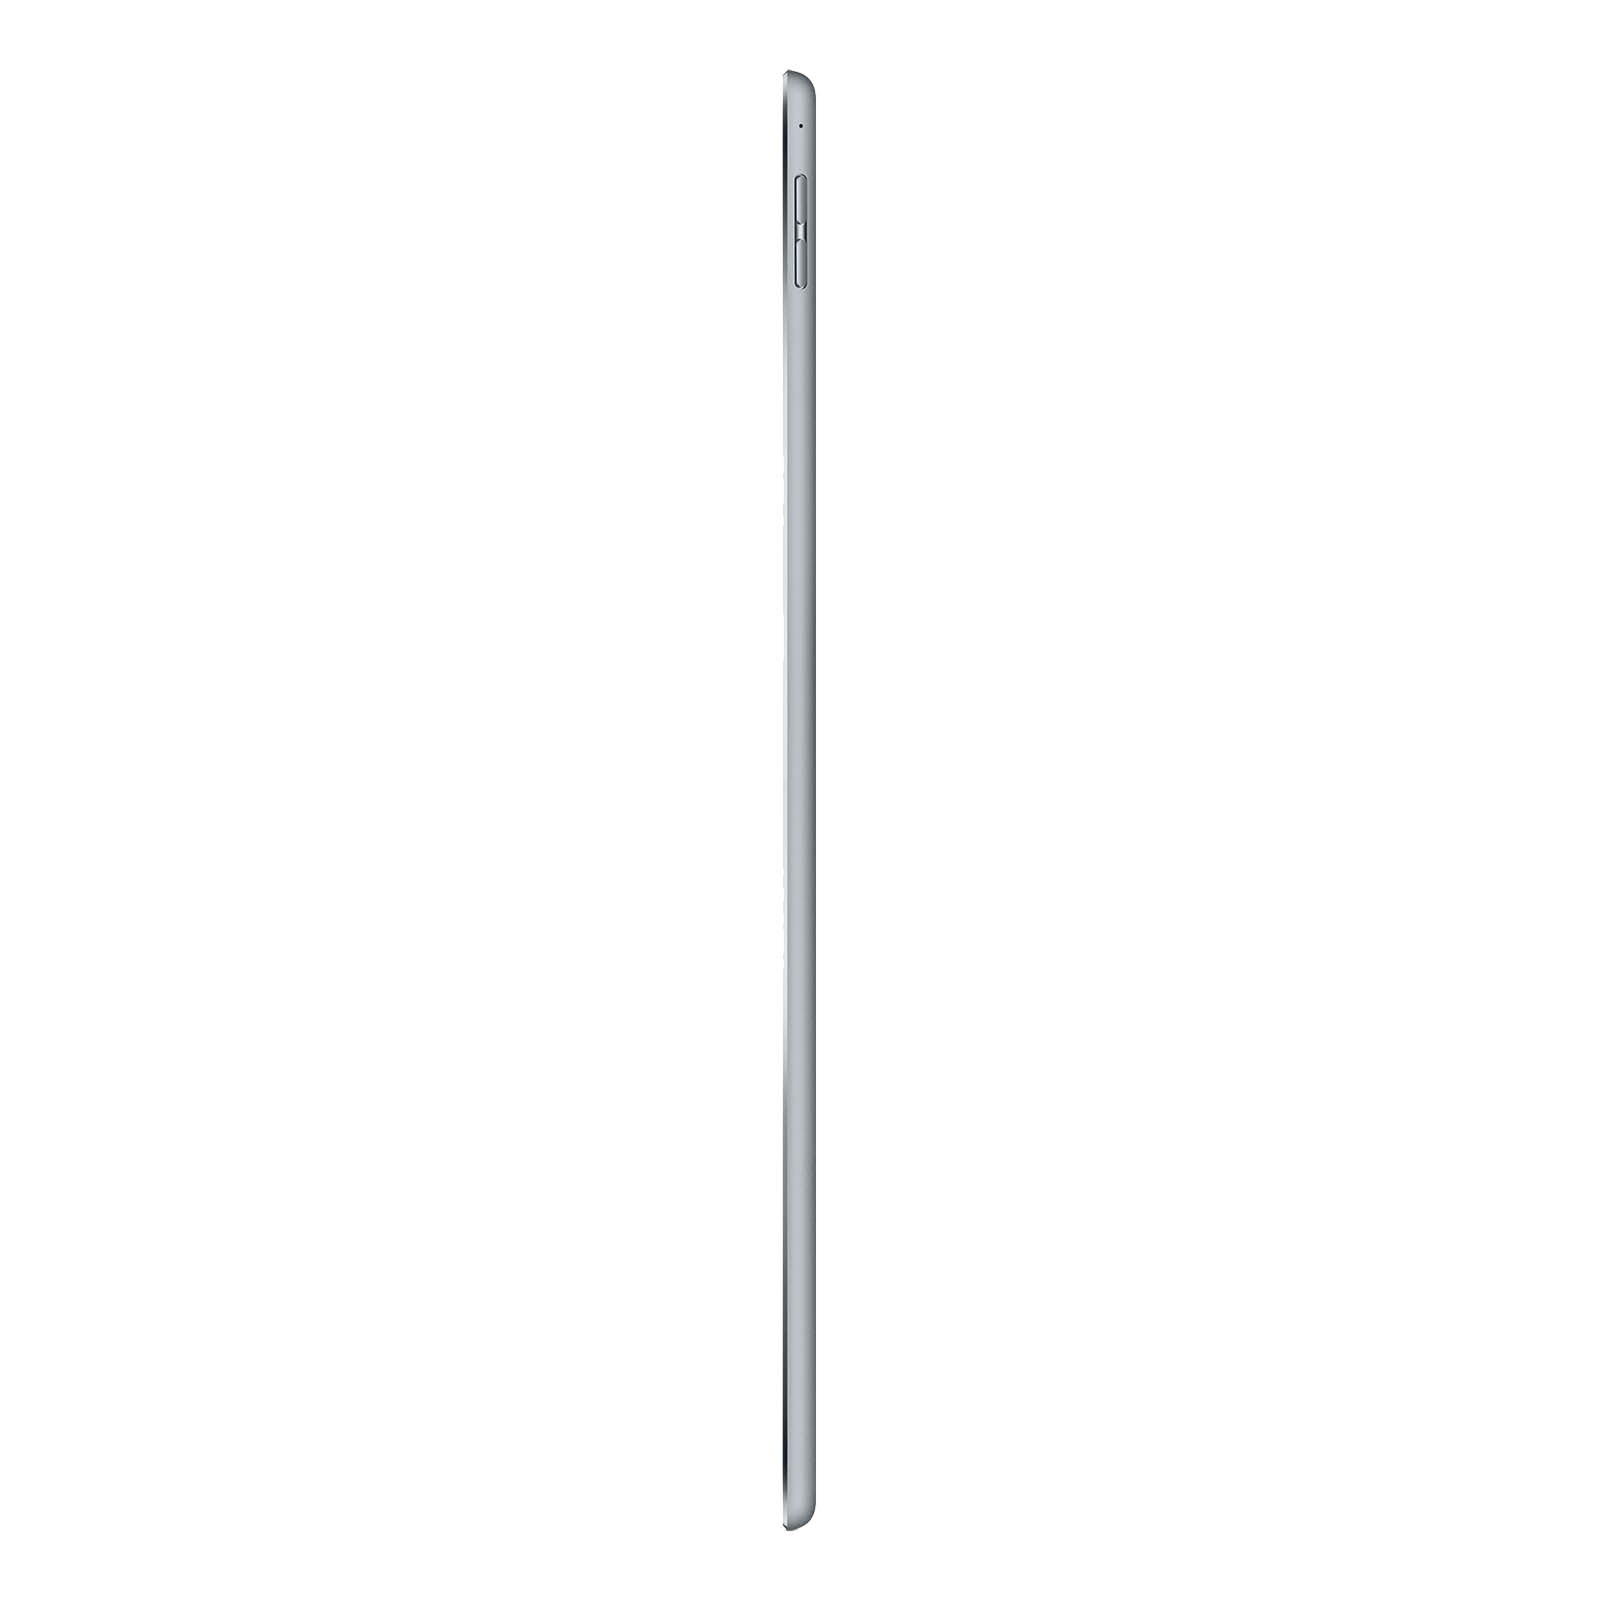 Apple iPad Pro 12.9 inch 256Go WiFi - Gris Sidéral - Comme Neuf